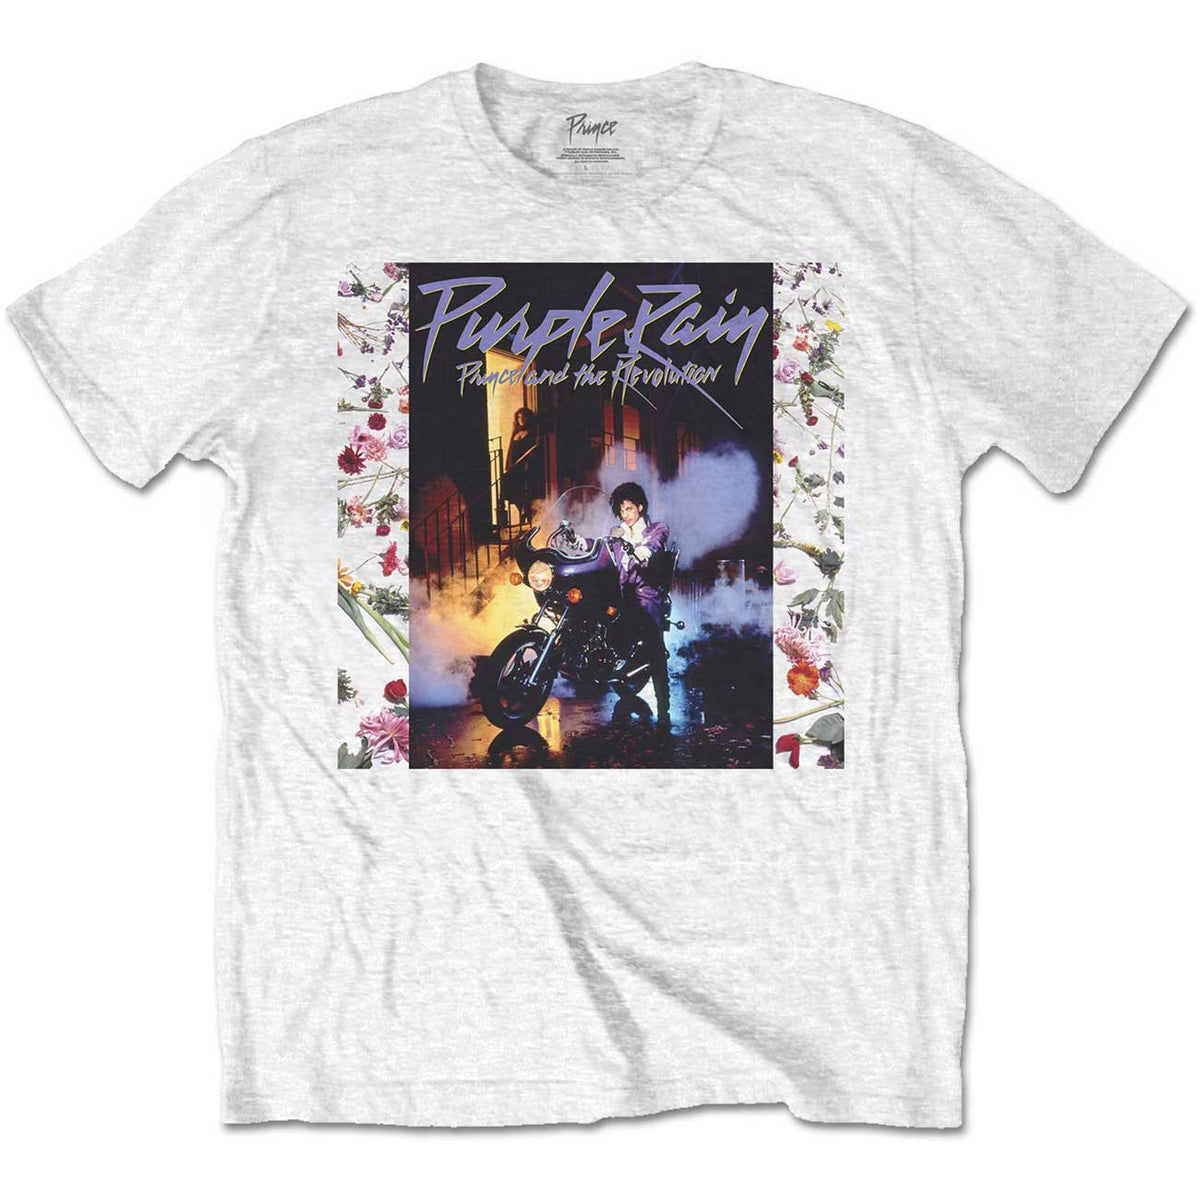 Prince T-Shirt - Purple Rain Album - White Unisex Official Licensed Design